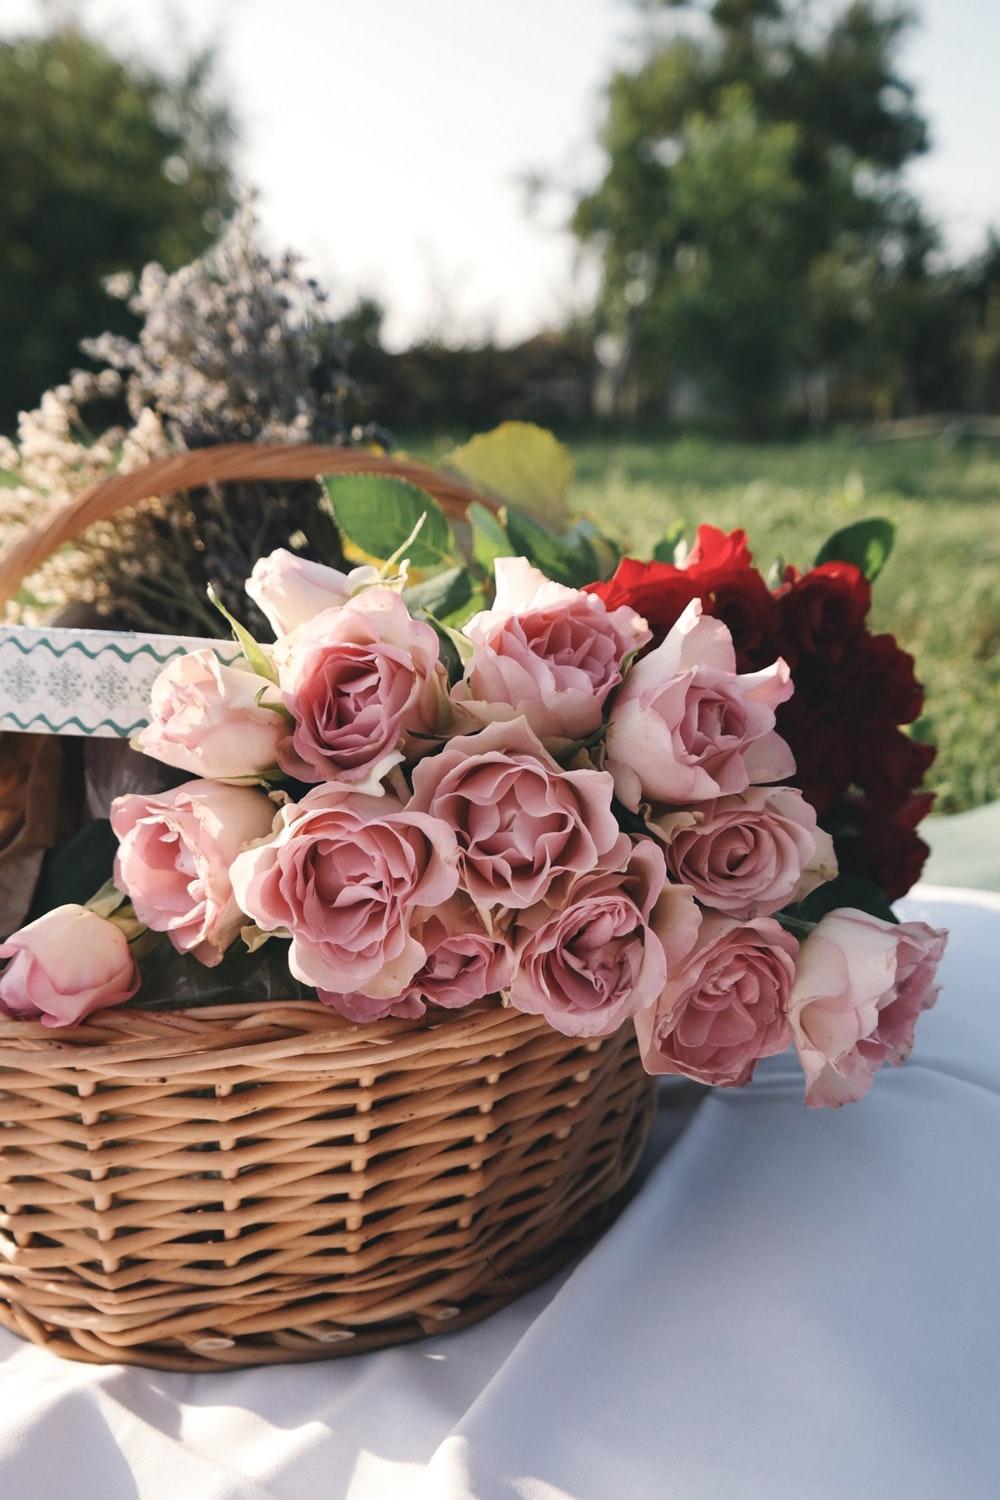 Flower Basket Picture. Download Free Image